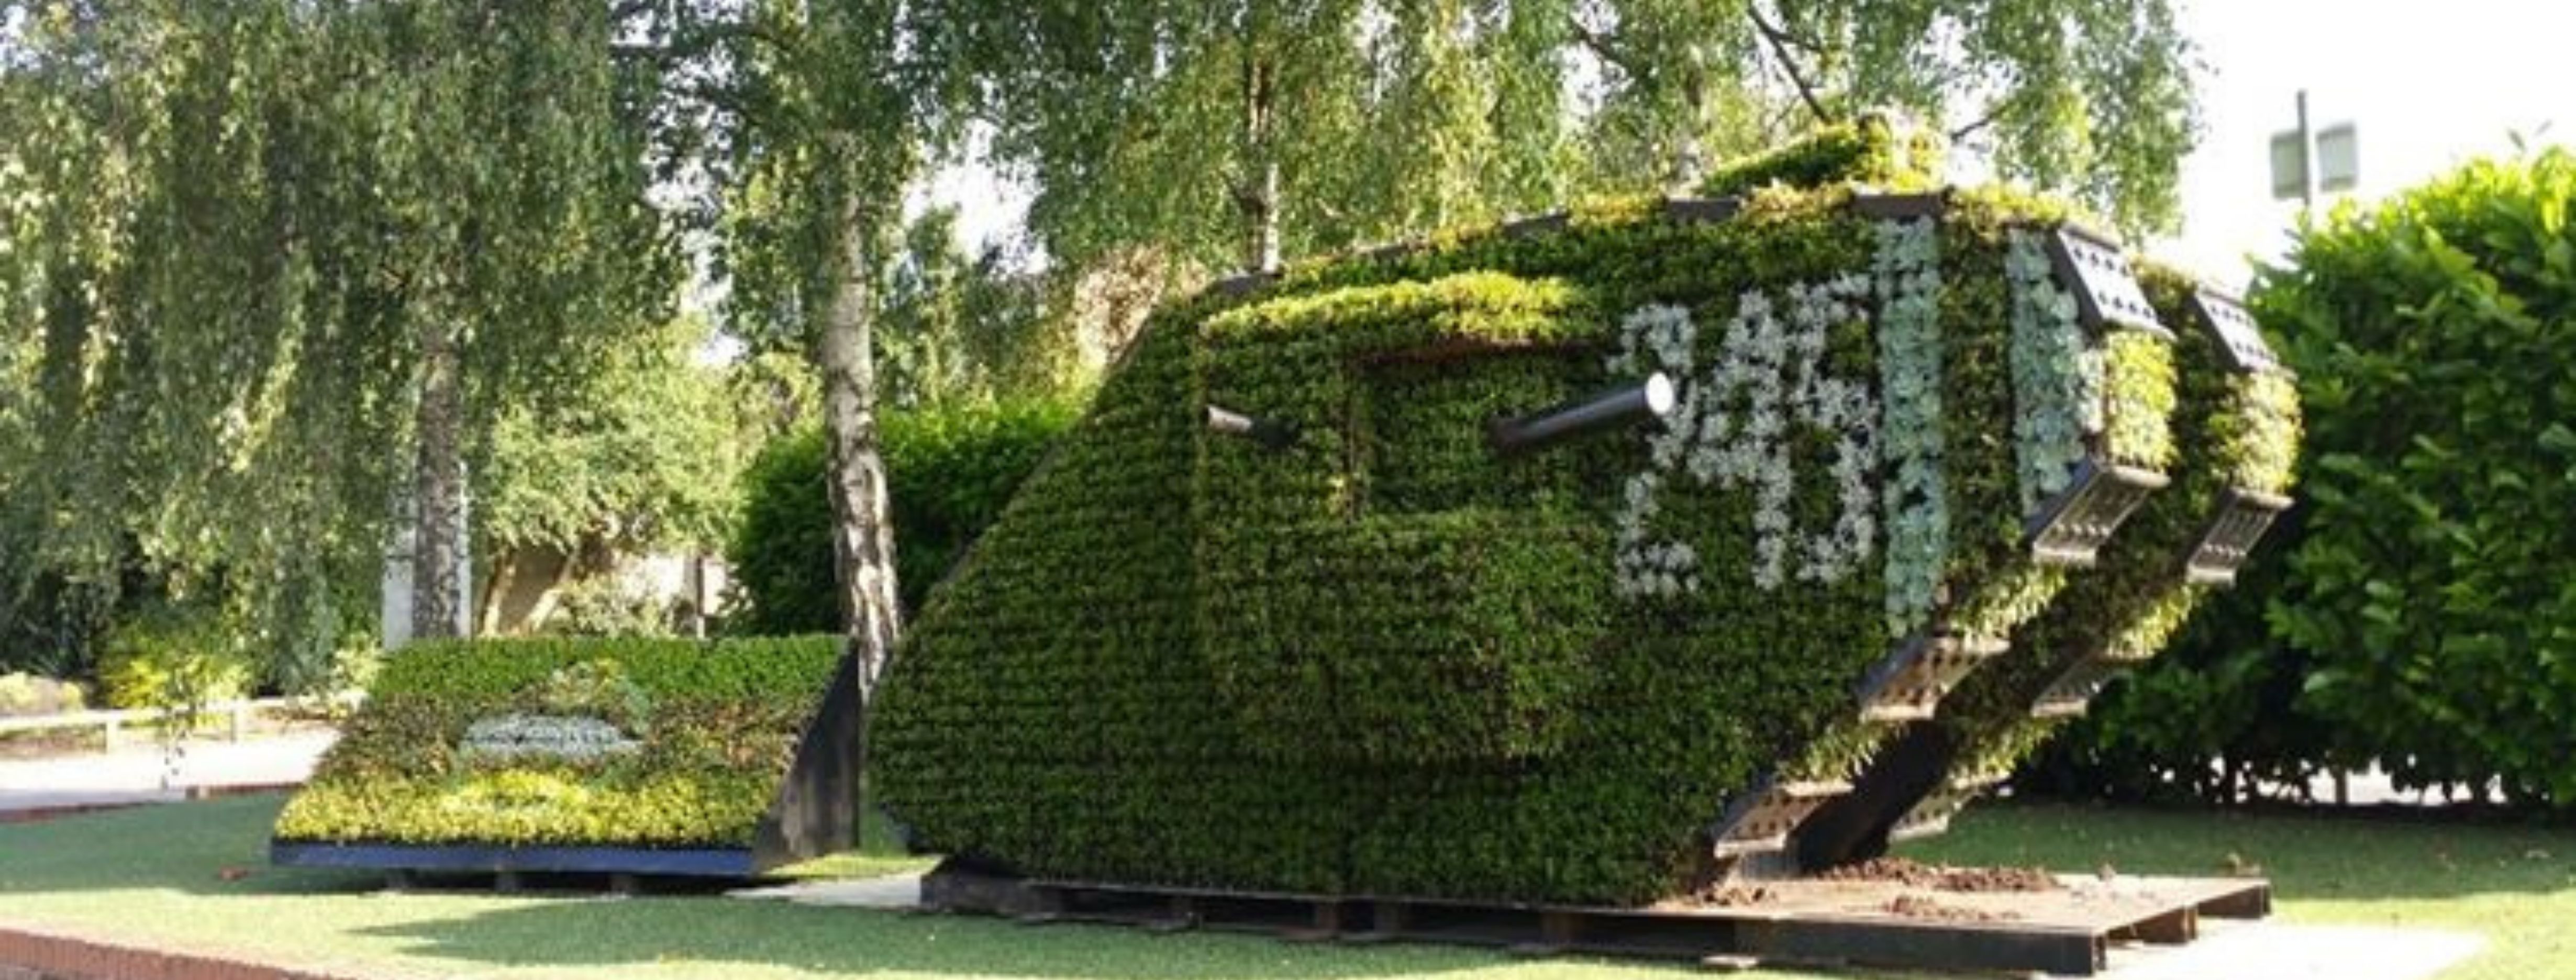 plant tank in Ashford memorial gardens